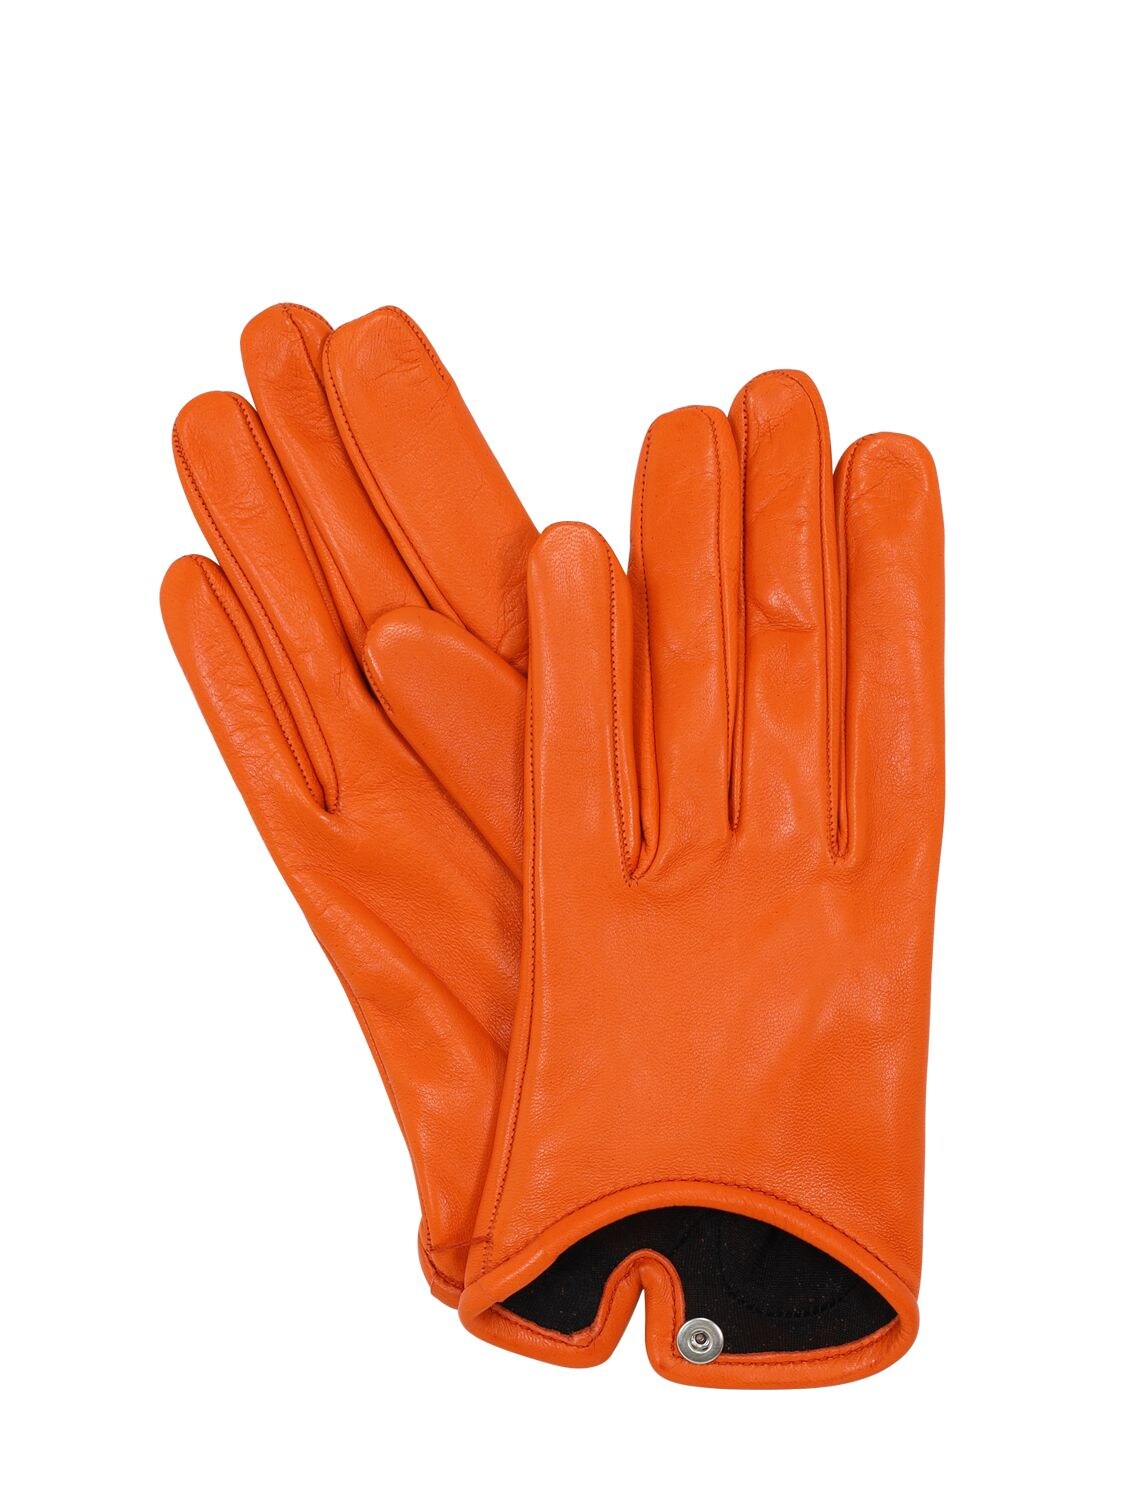 Mario Portolano Leather Gloves In Orange